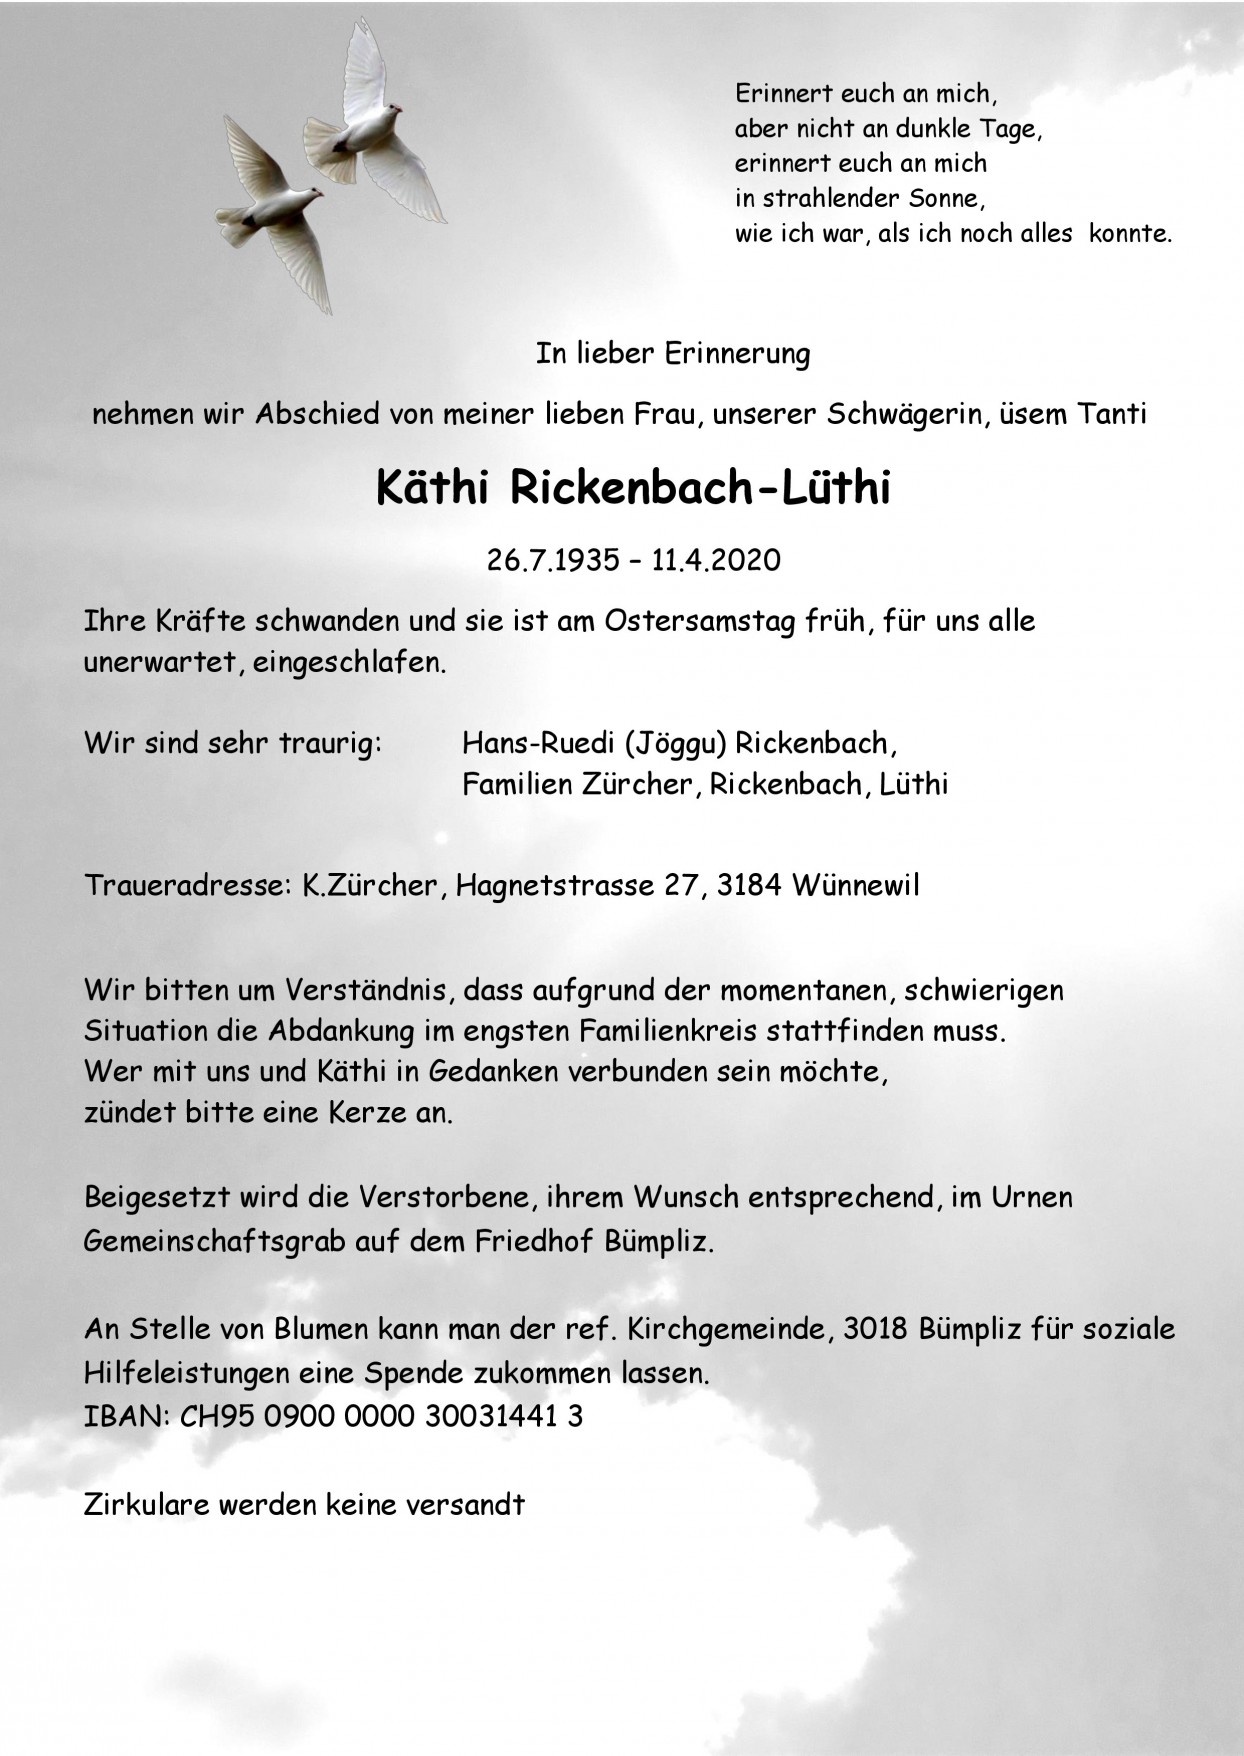 Käthi Rickenbach